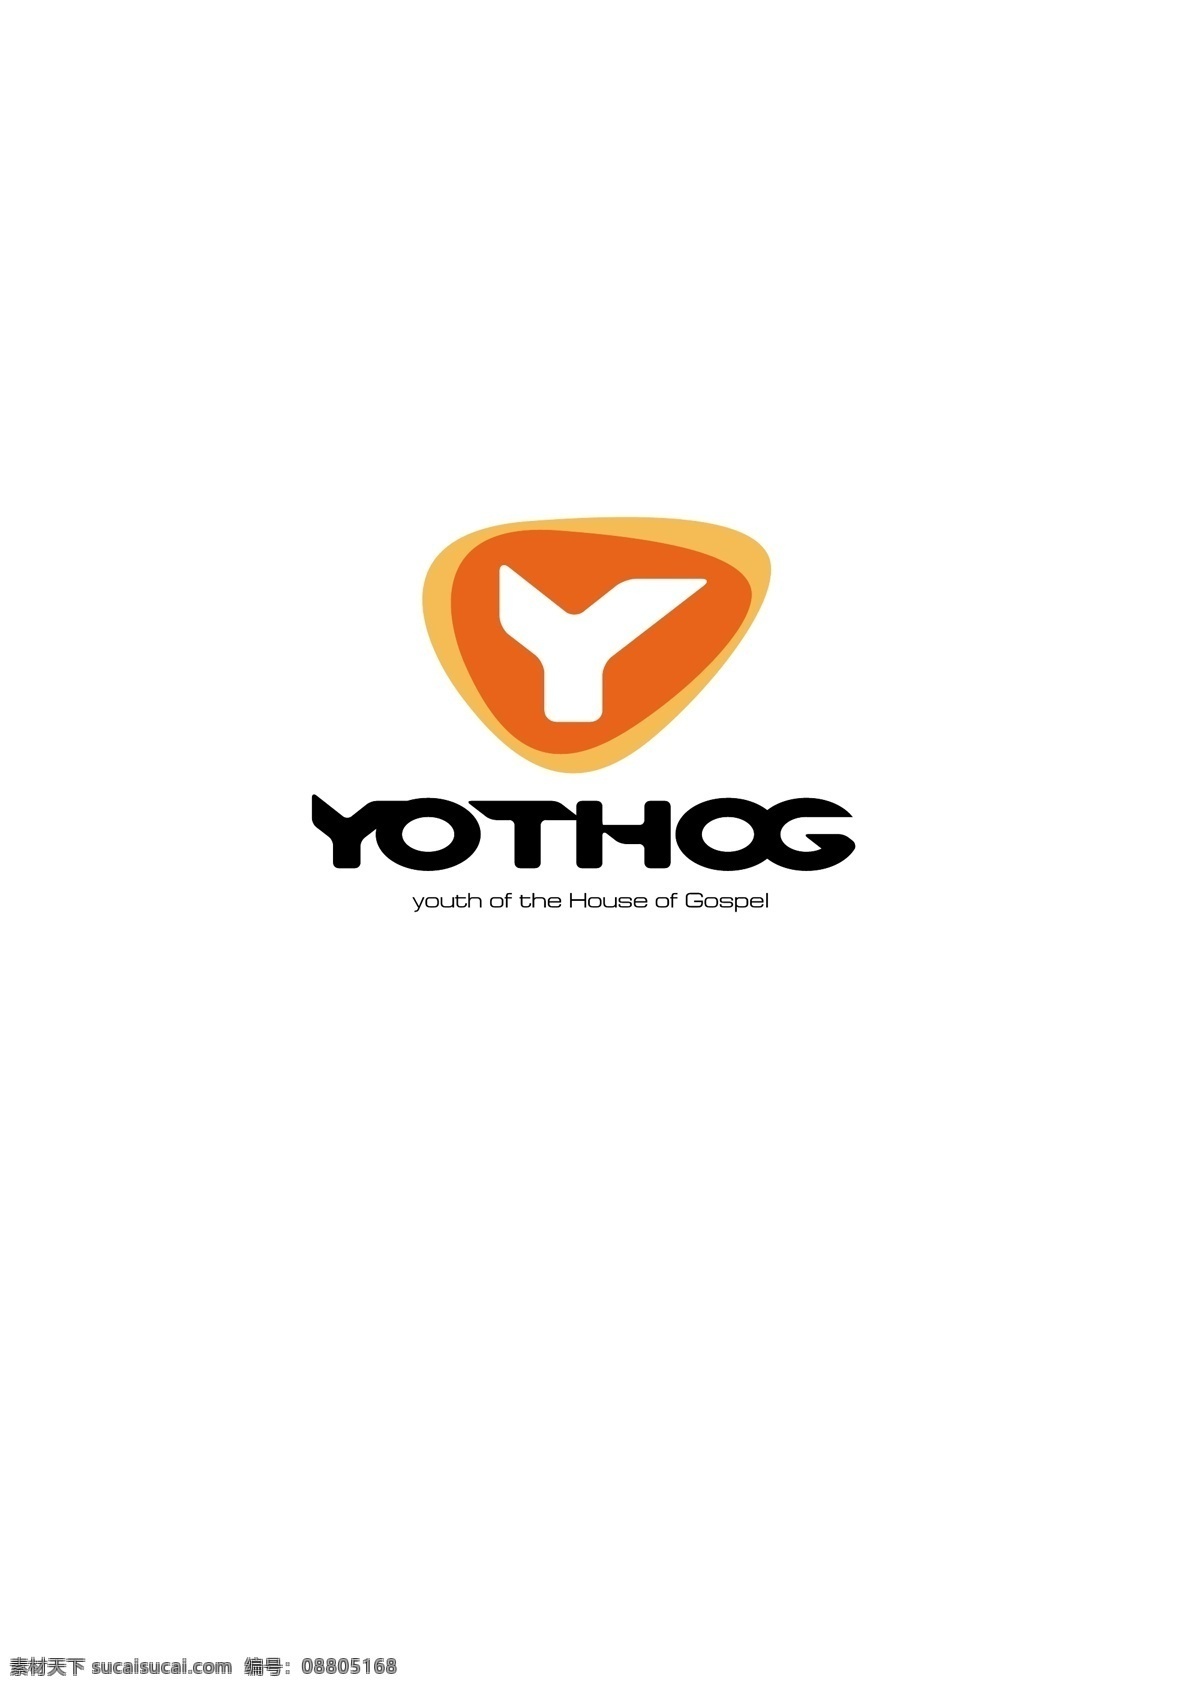 yothog logo大全 logo 设计欣赏 商业矢量 矢量下载 知名 学校 标志设计 欣赏 网页矢量 矢量图 其他矢量图